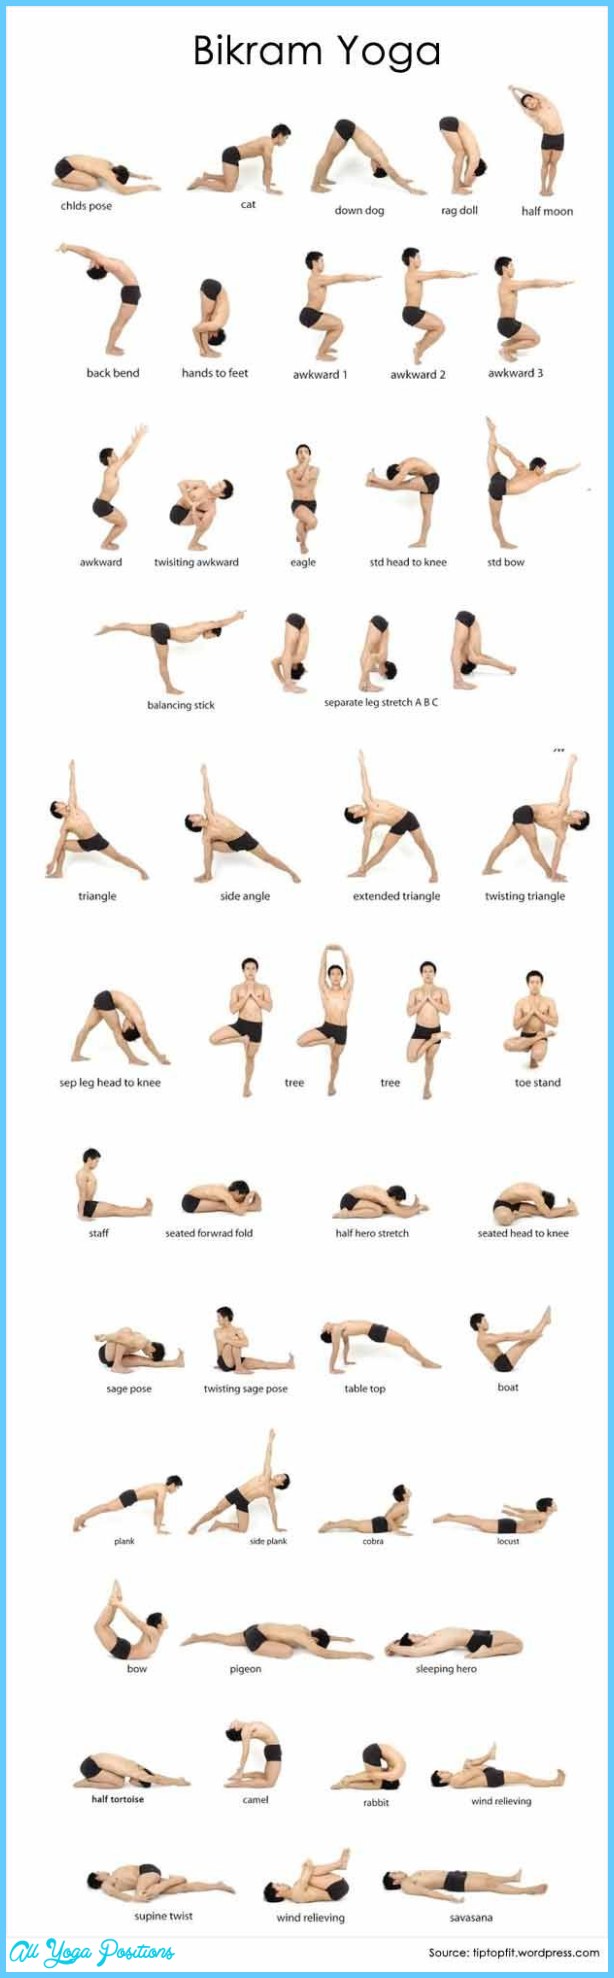 bikram yoga sequence